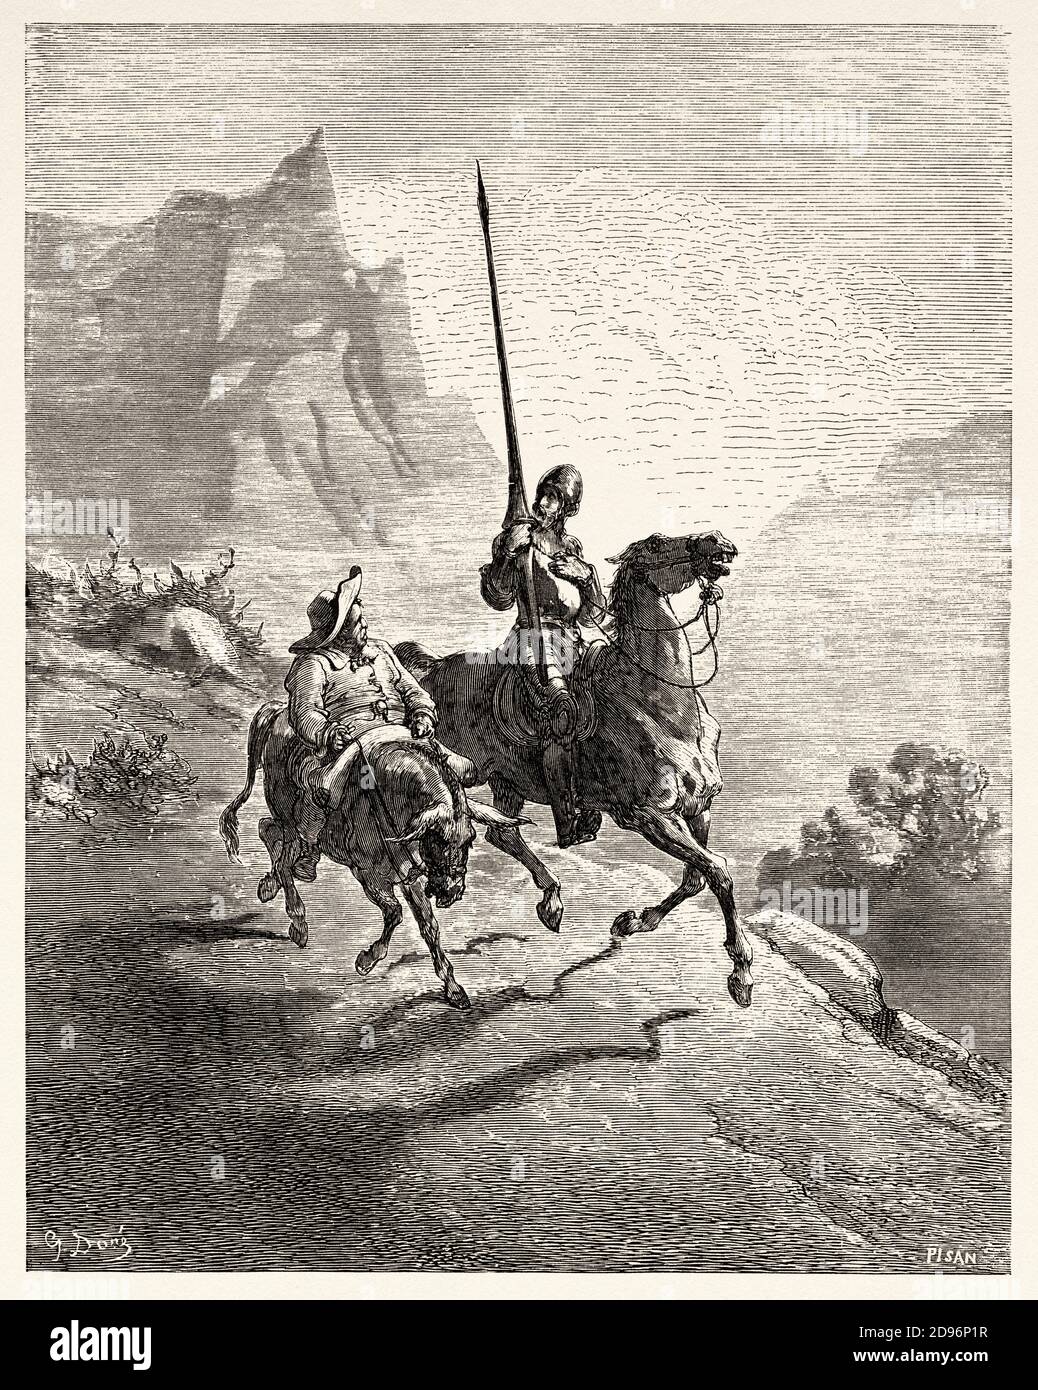 Don Quixote and Sancho Panza. Don Quixote by Miguel de Cervantes Saavedra. Old XIX century engraving illustration by Gustave Dore Stock Photo